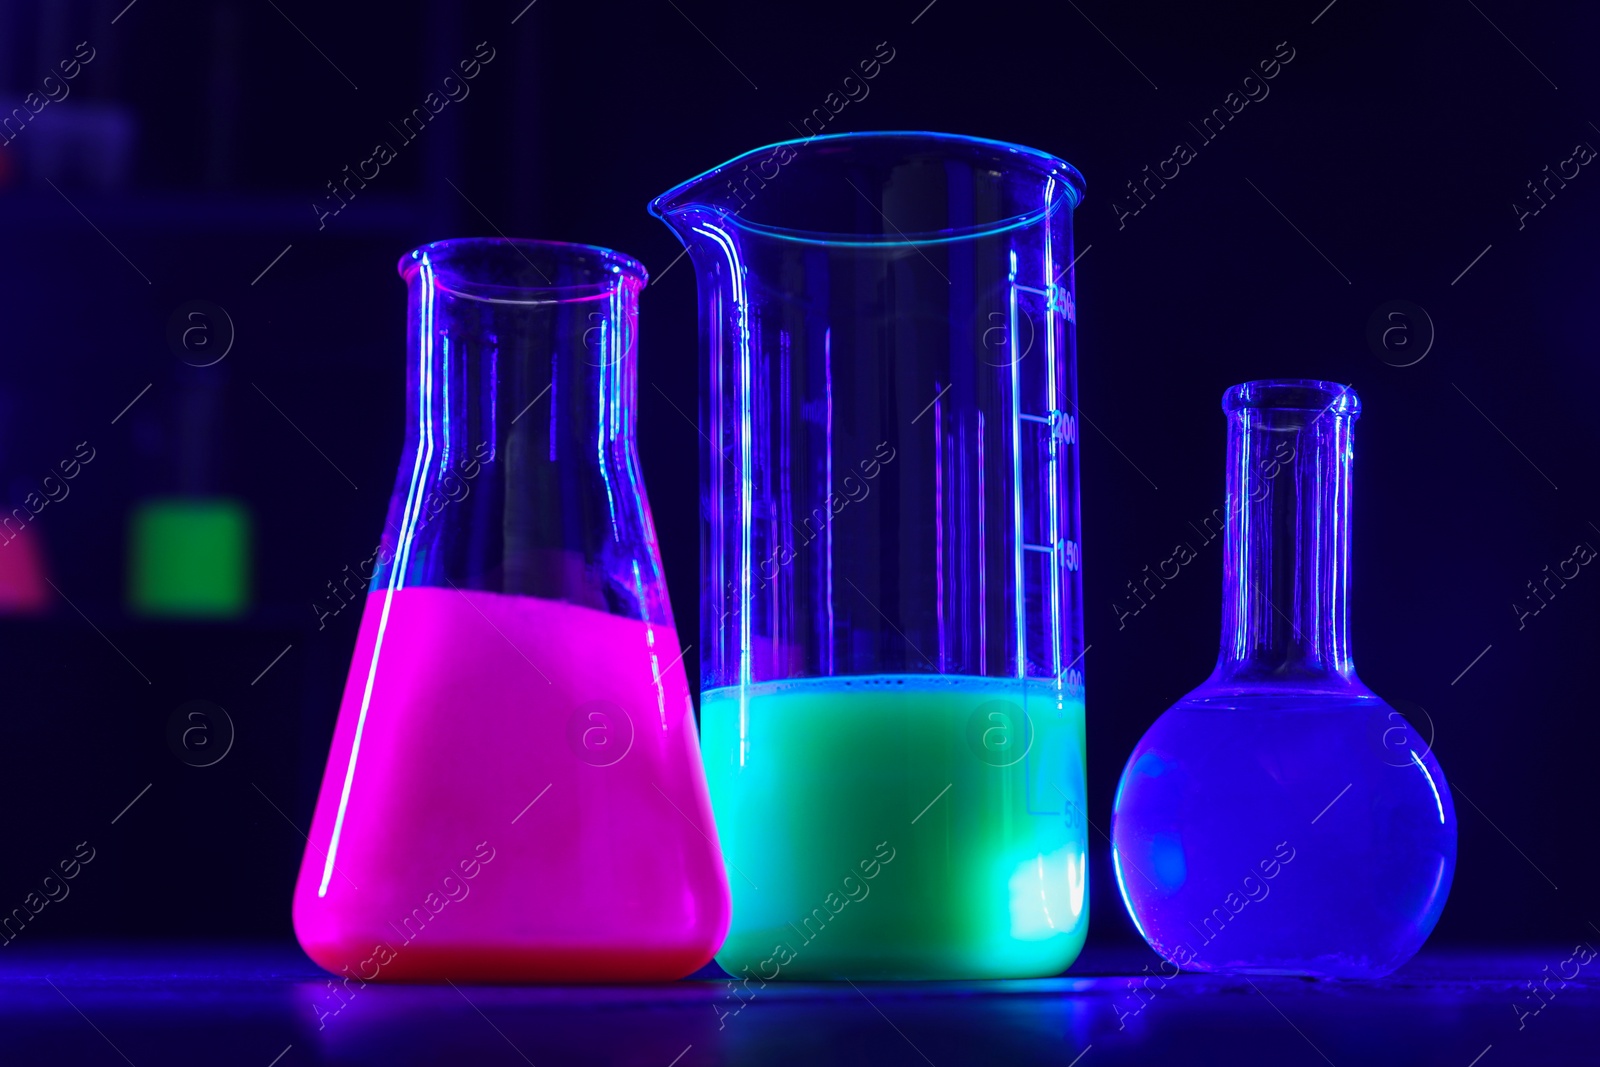 Photo of Laboratory glassware with luminous liquids on table against dark background